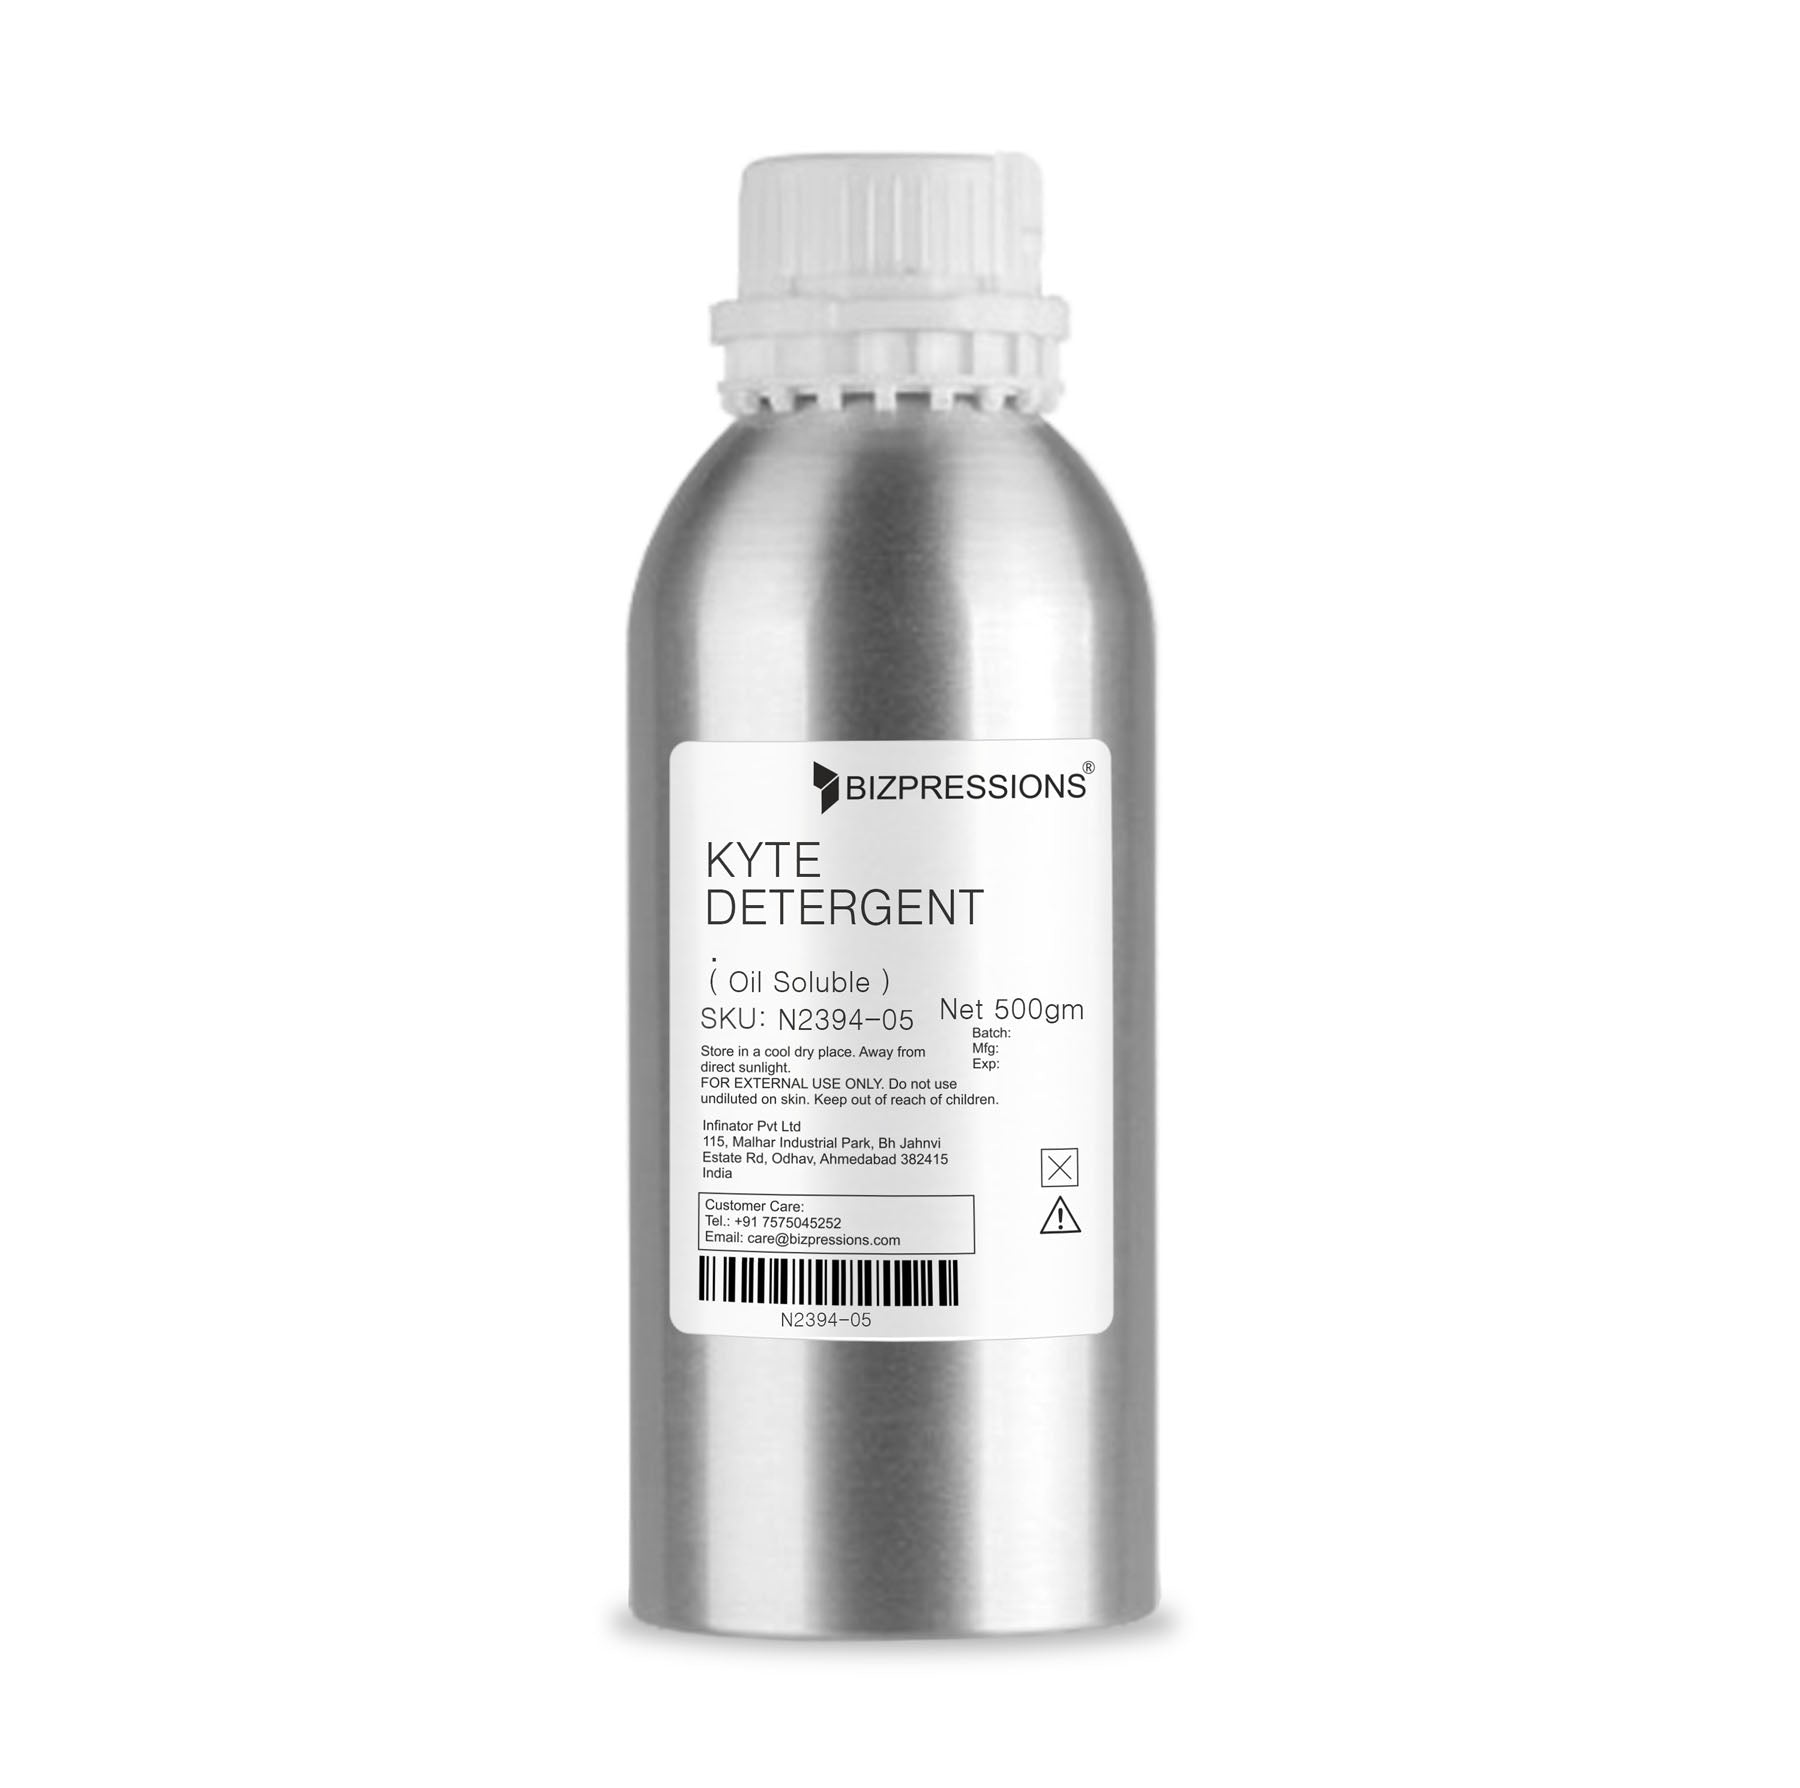 KYTE DETERGENT - Fragrance ( Oil Soluble ) - 500 gm